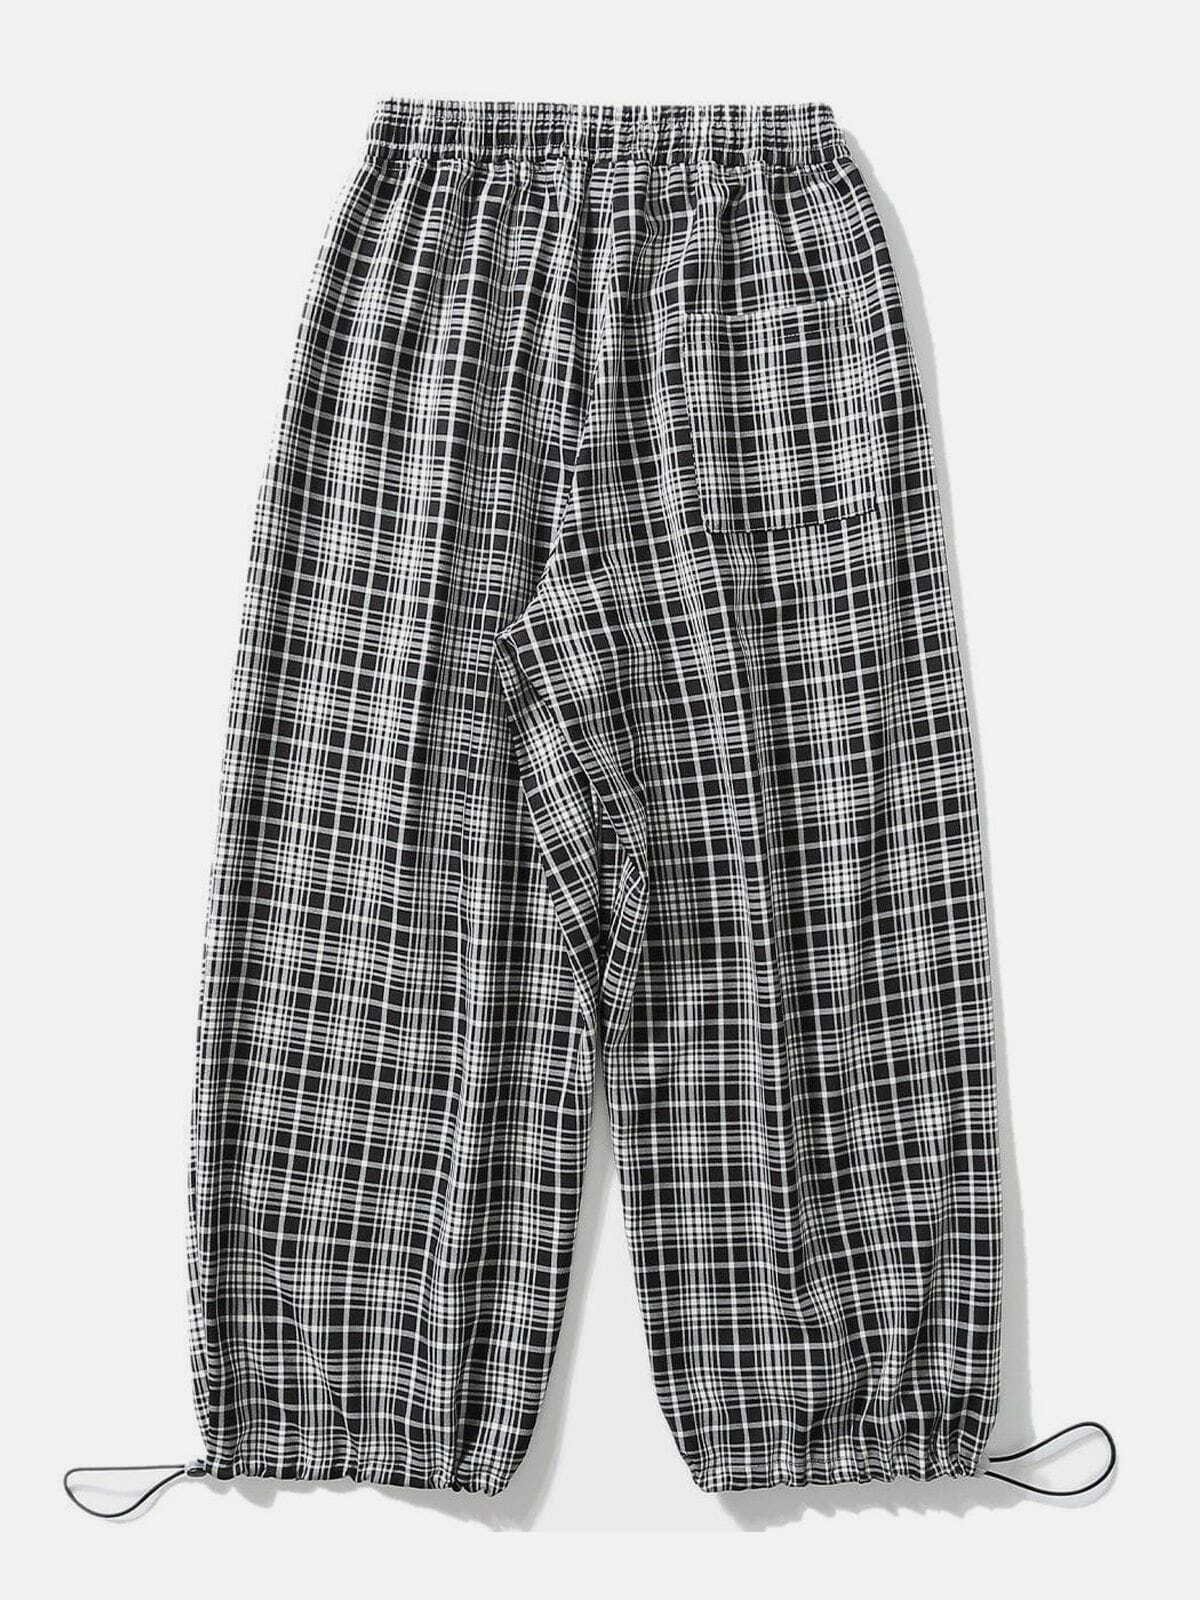 monochrome checkered drawstring pants edgy y2k streetwear 8465